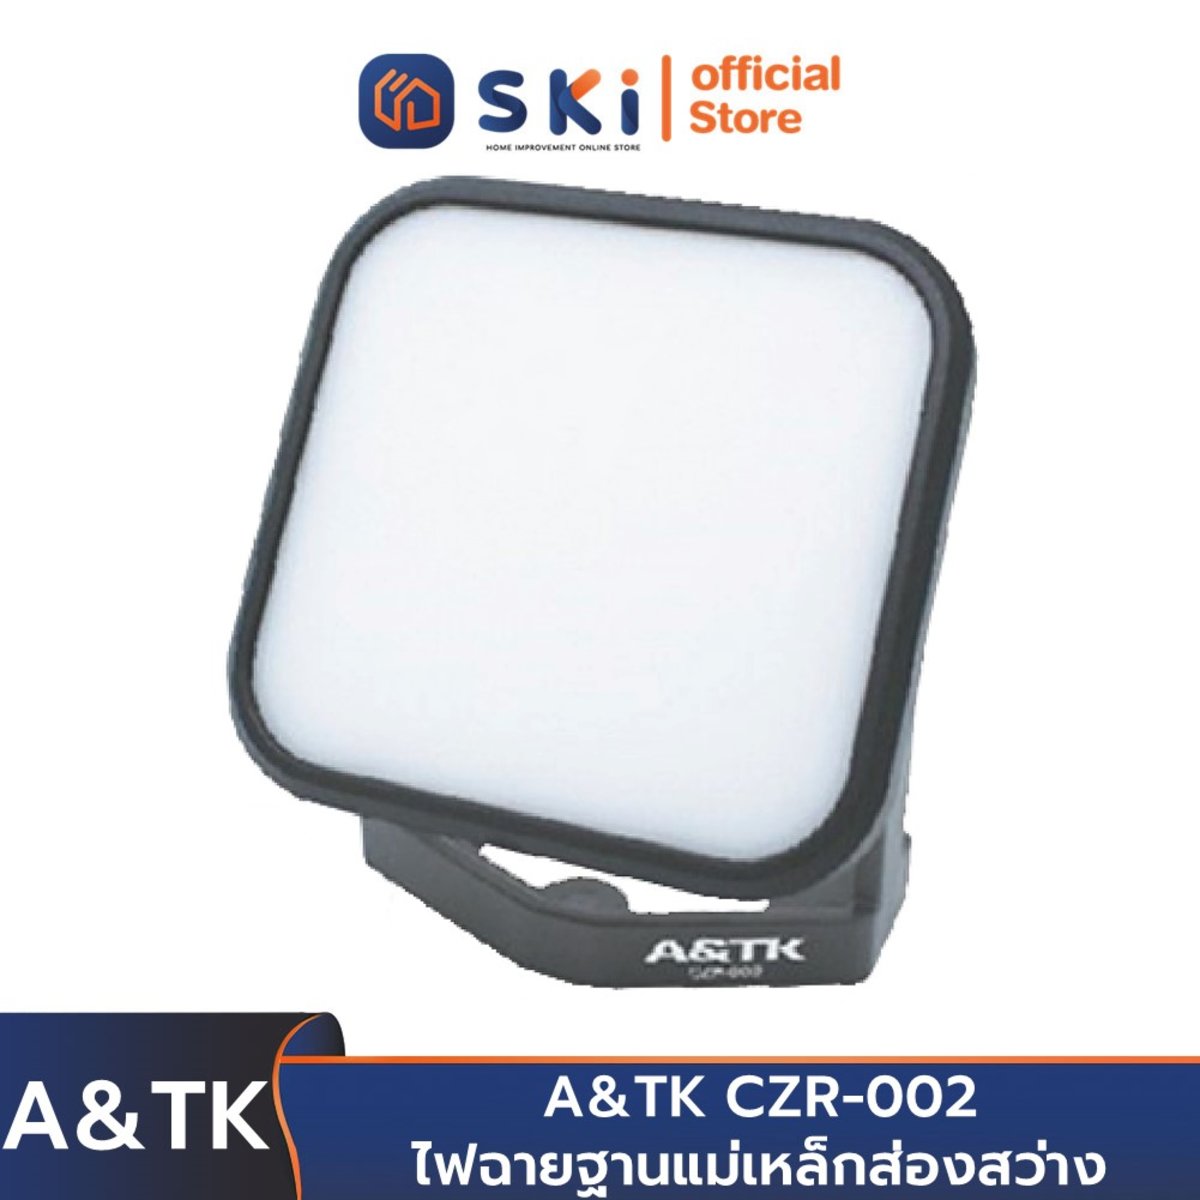 ATK CZR-002 ไฟฉายฐานแม่เหล็ก (Li-on 3.7v 2,000mAh) ส่องสว่าง 350 lm SKI  OFFICIAL 350 lm